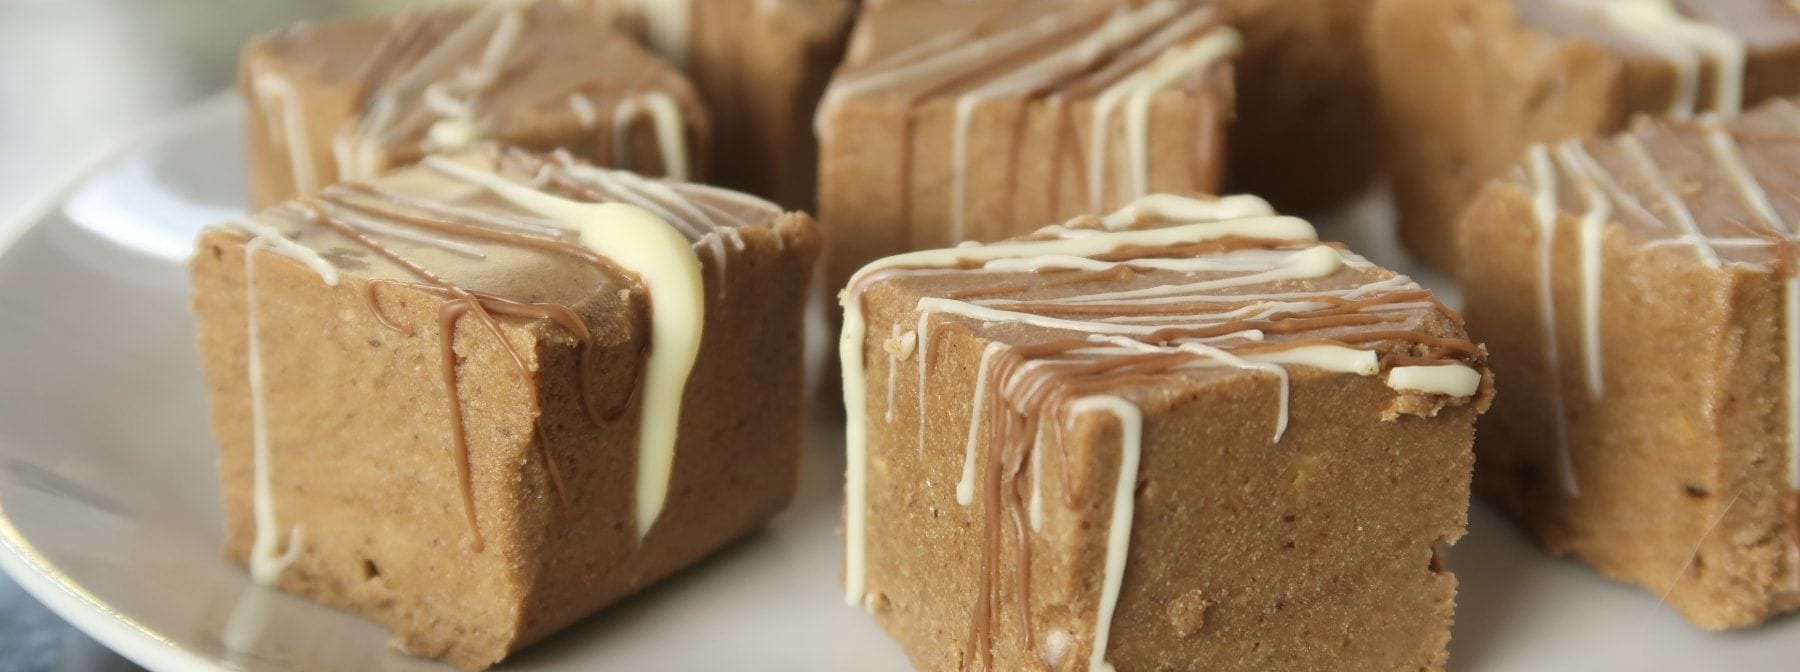 Healthy Chocolate Fudge Recipe | Low Sugar & High Protein